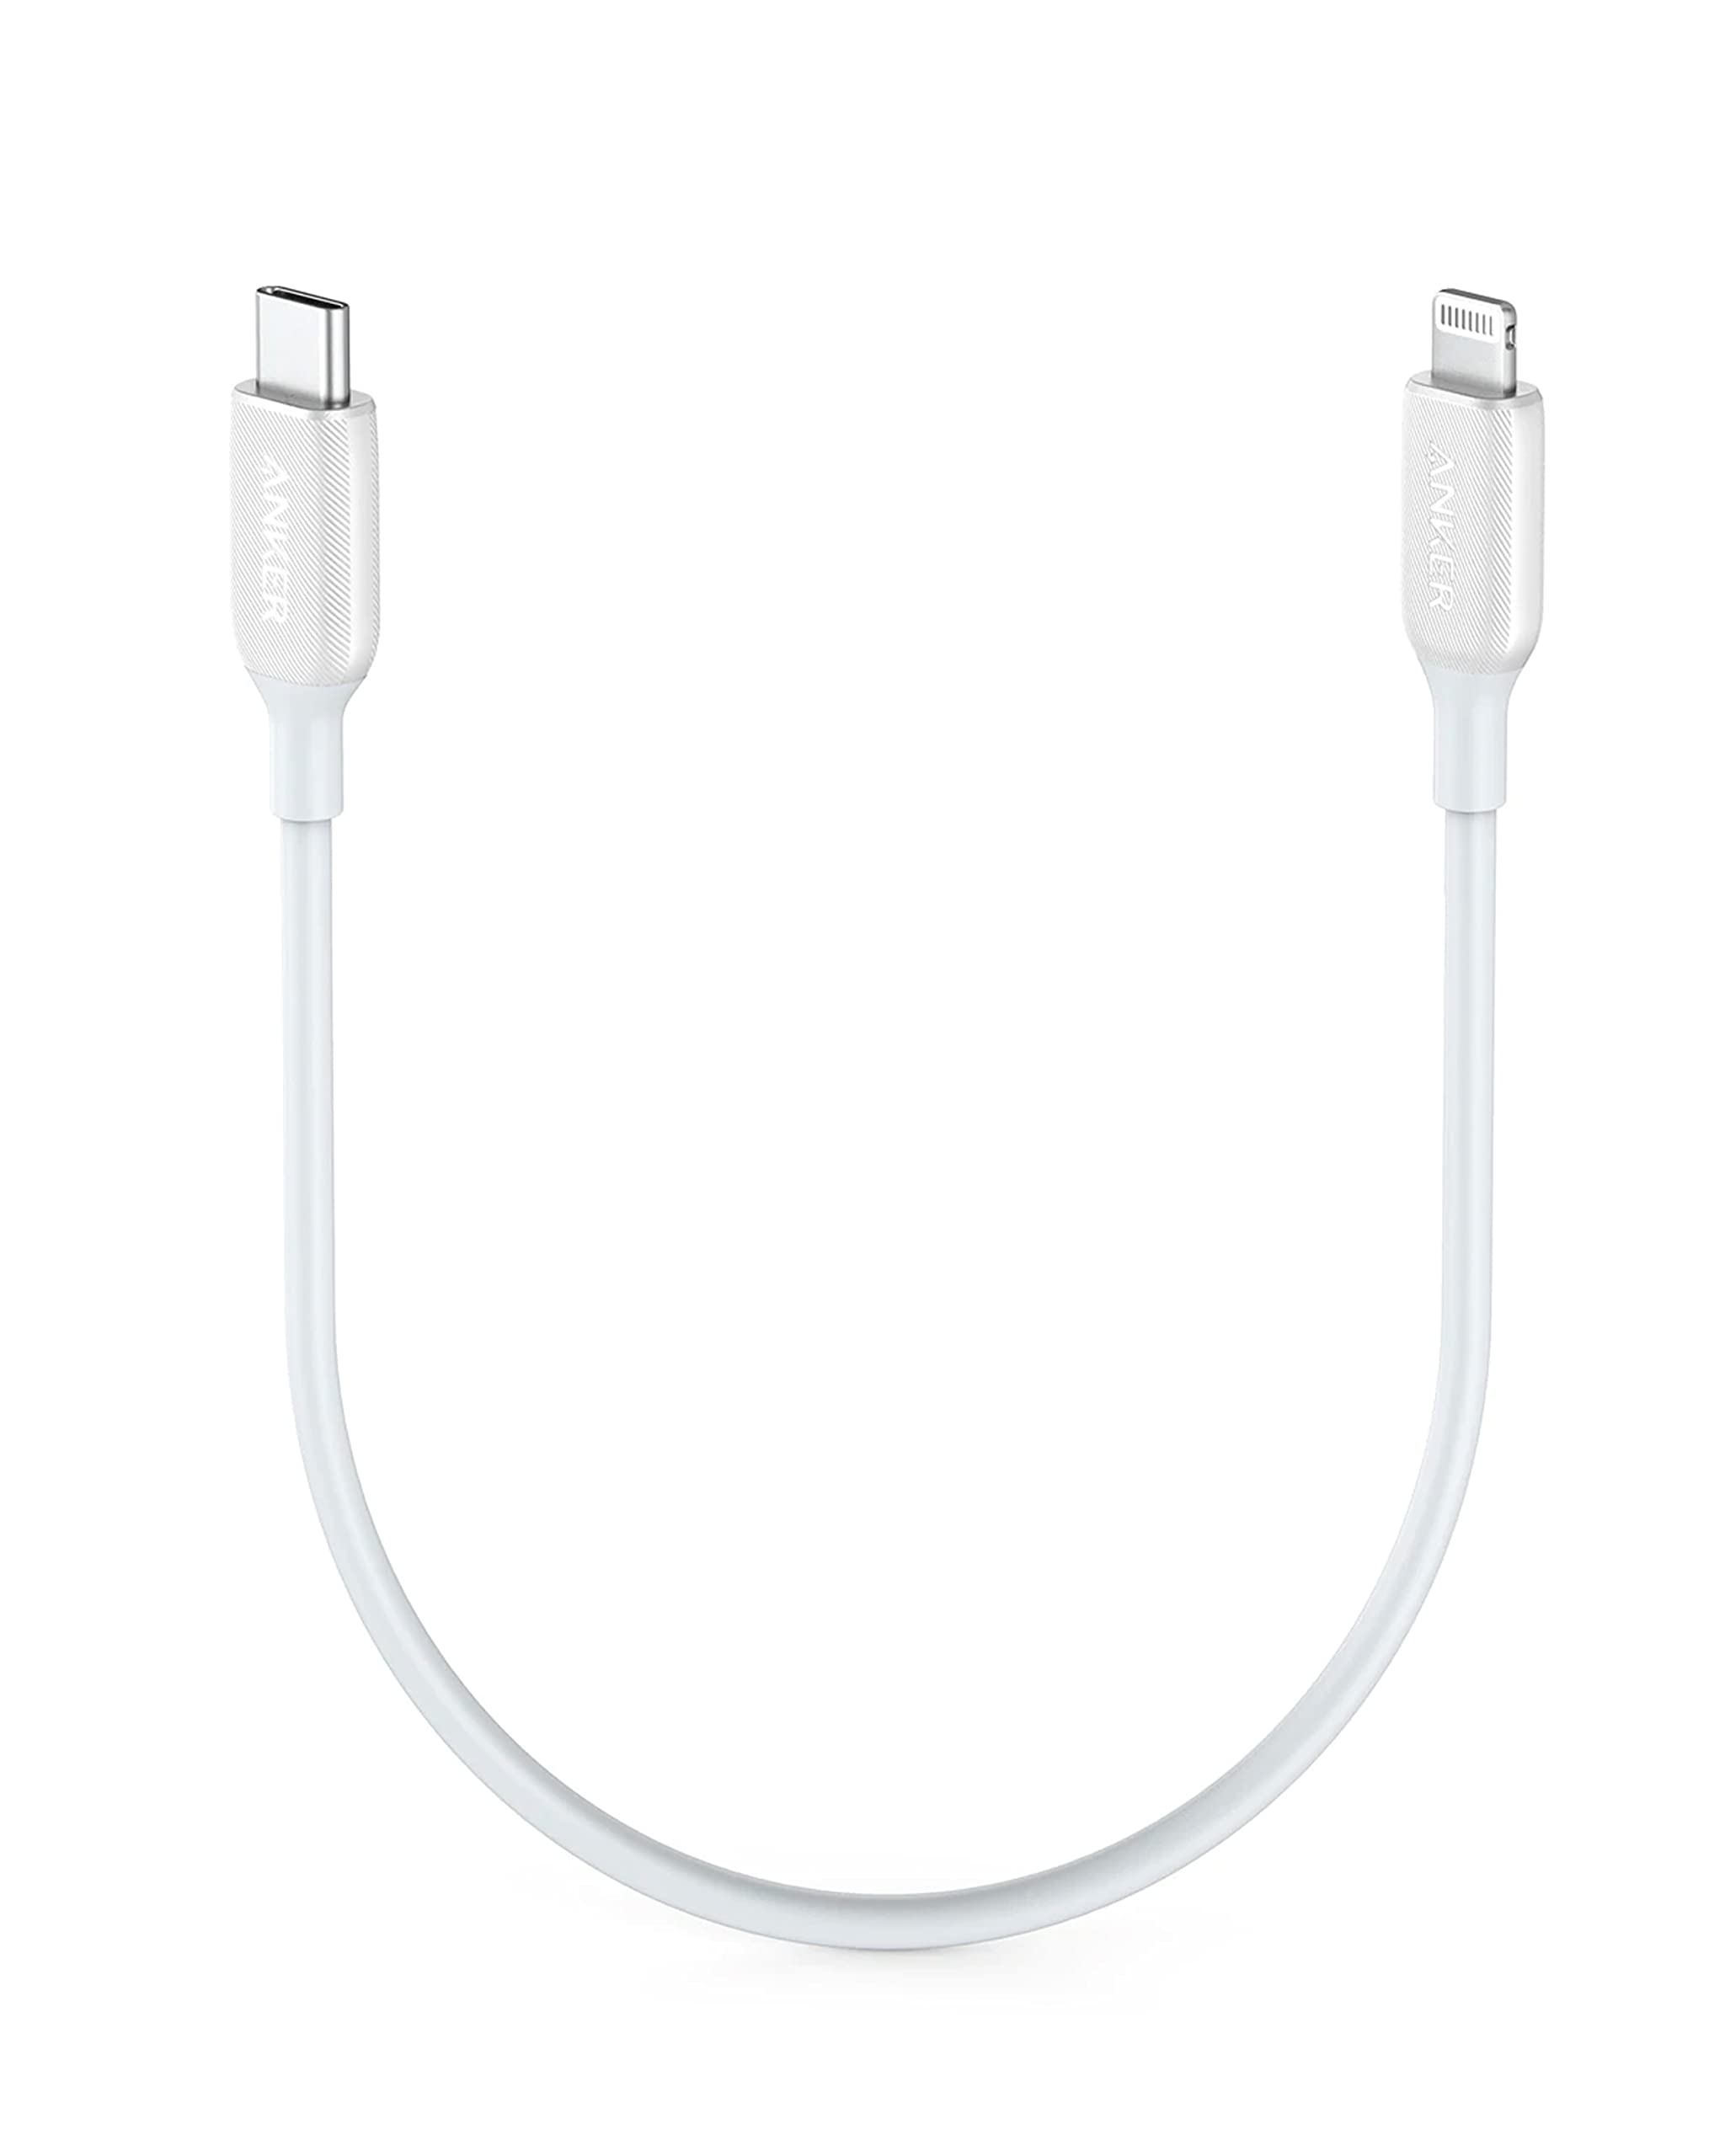 Anker PowerLine III USB-C ライトニング ケーブル MFi認証 USB PD対応 急速充電 iPhone 14 / 13 / 12 / SE(第3世代) 各種対応 (0.3m ホワイト)